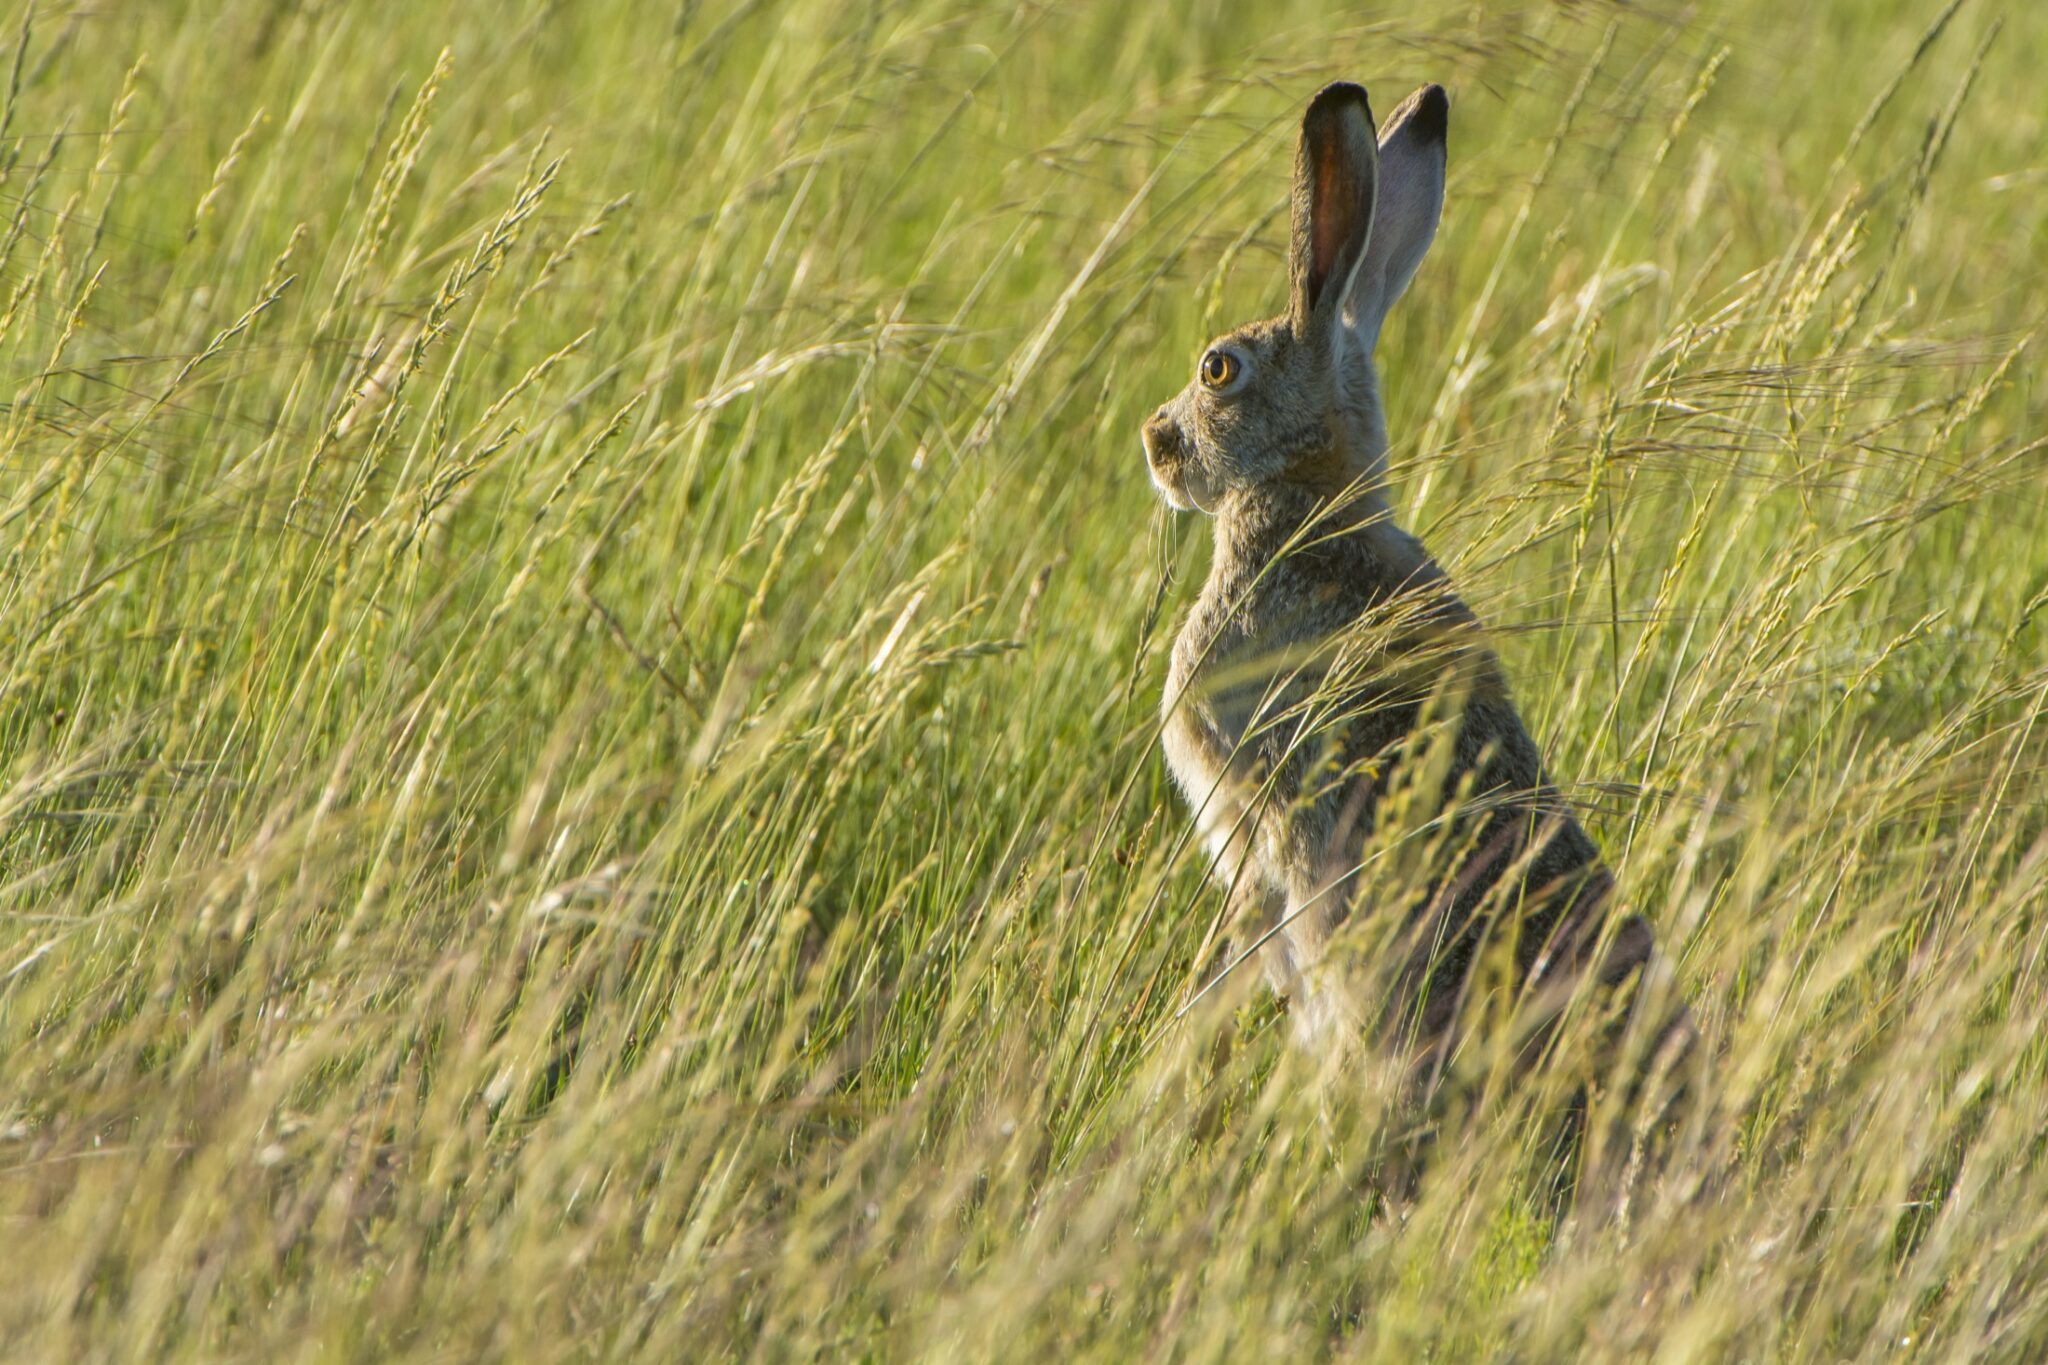 A rabbit peeking over grasses